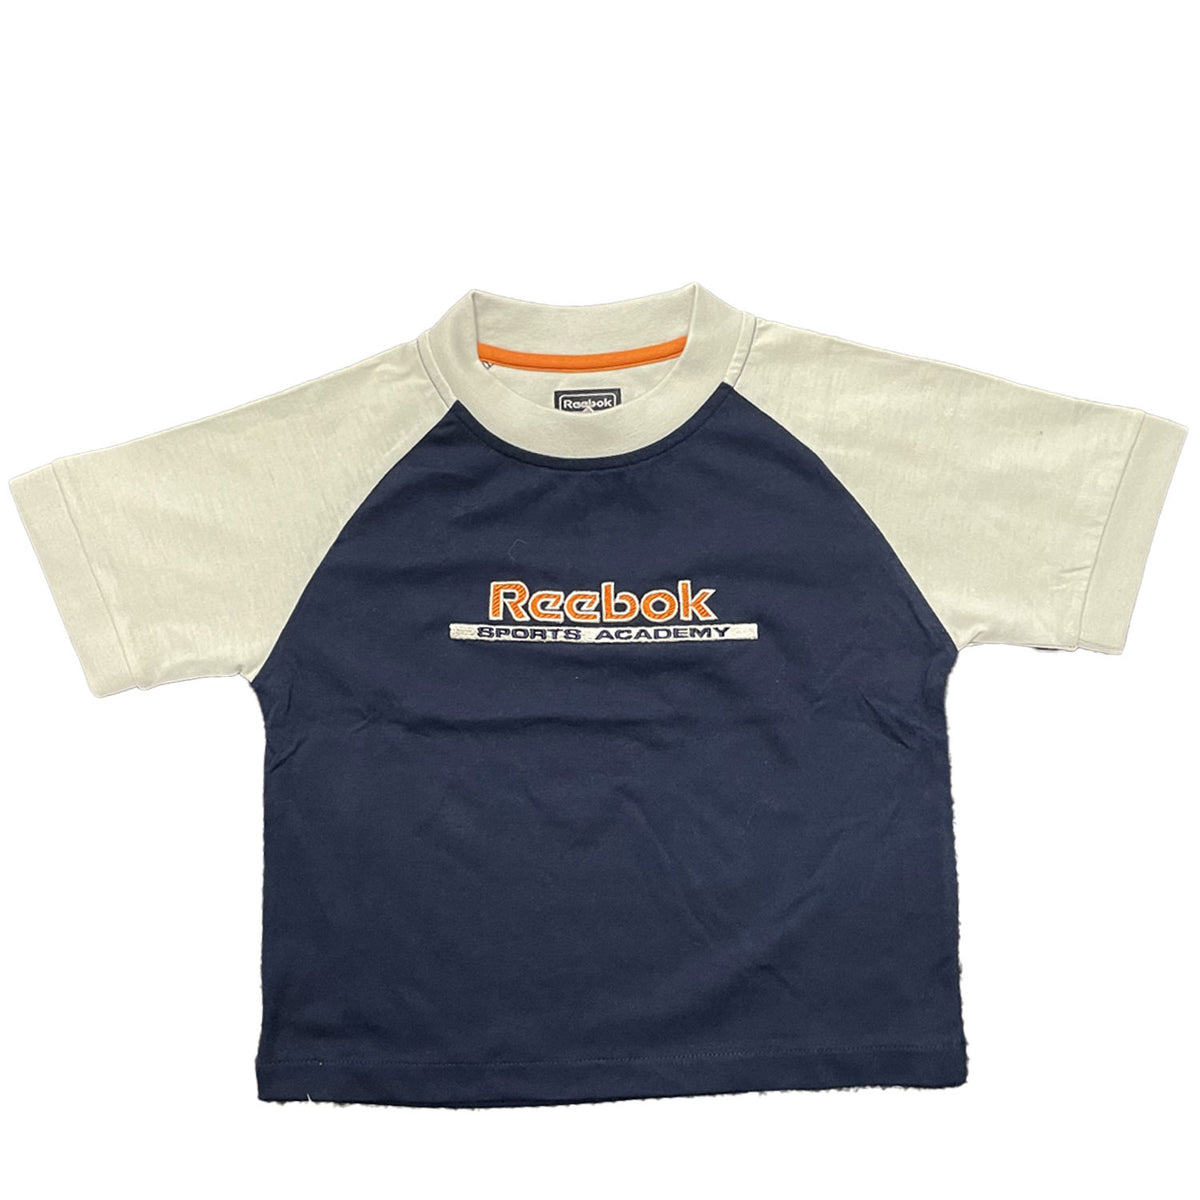 Reeboks Infants Sport Academy T-Shirt